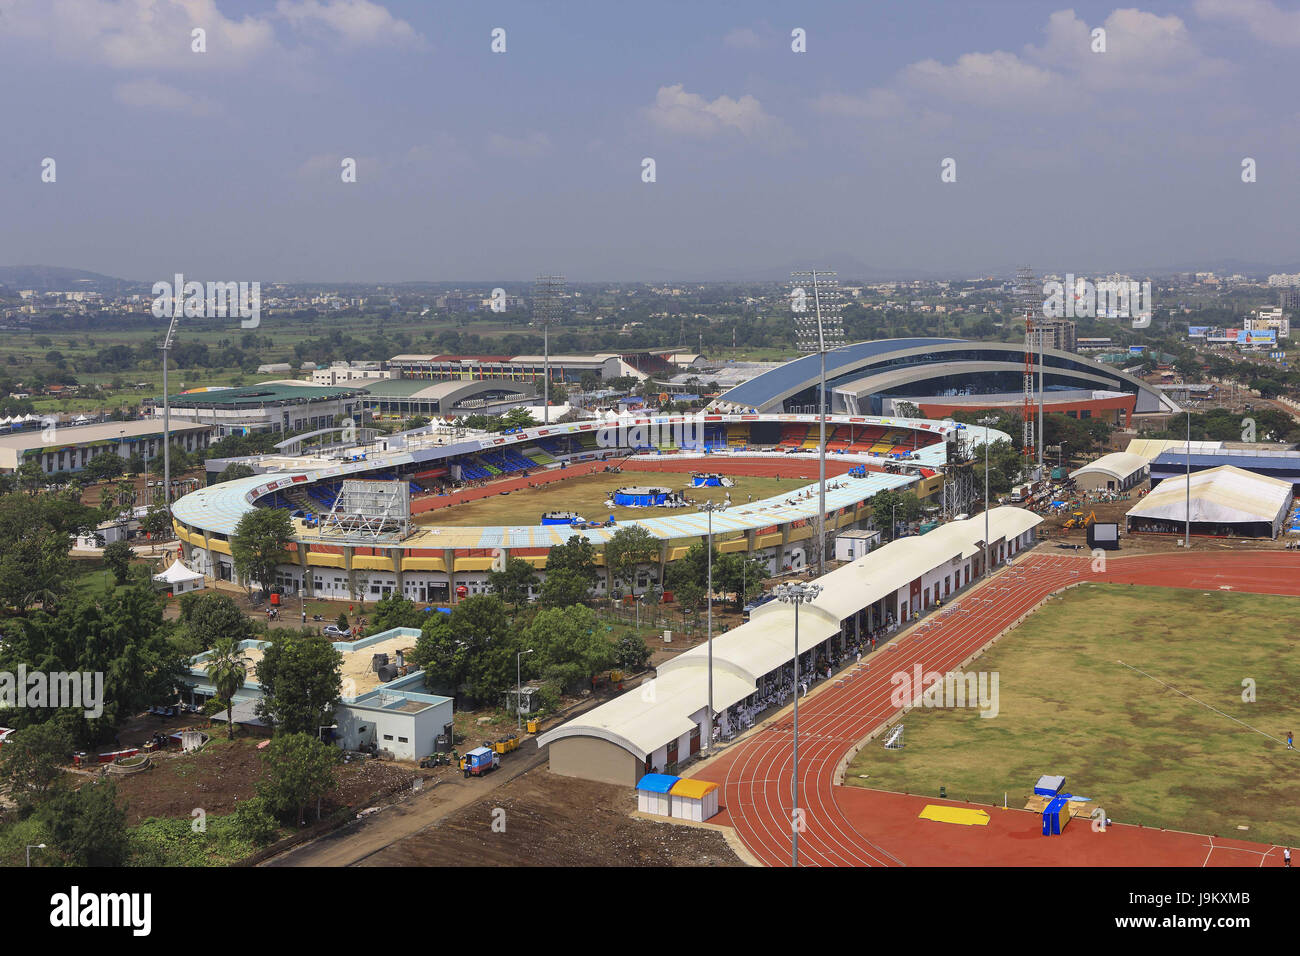 Shree shiv chhatrapati sports complex stadium, Pune, Maharashtra, Inde, Asie Banque D'Images